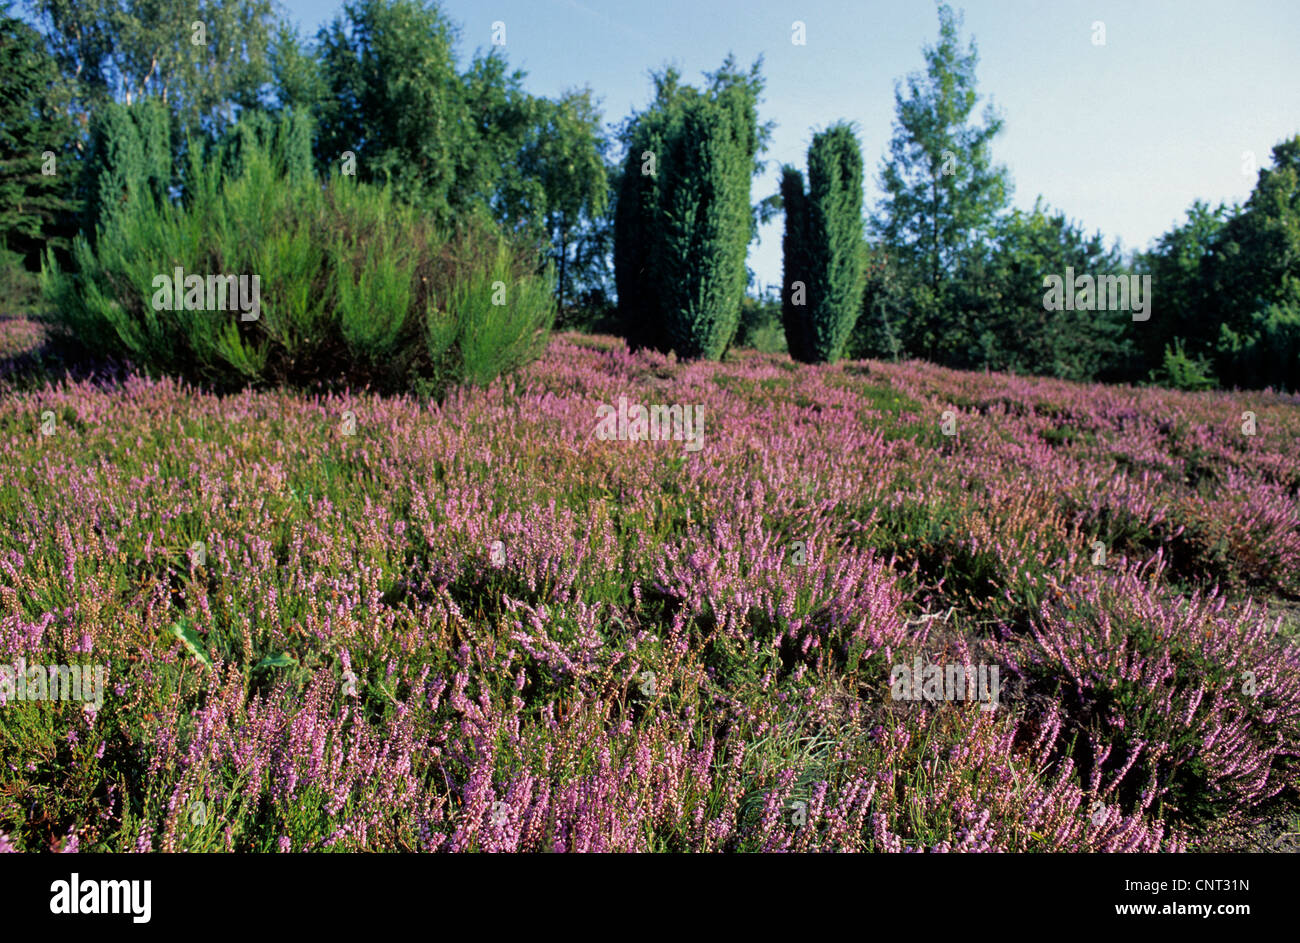 heather, ling (Calluna vulgaris), heath with juniper, Juniperus communis, Germany Stock Photo